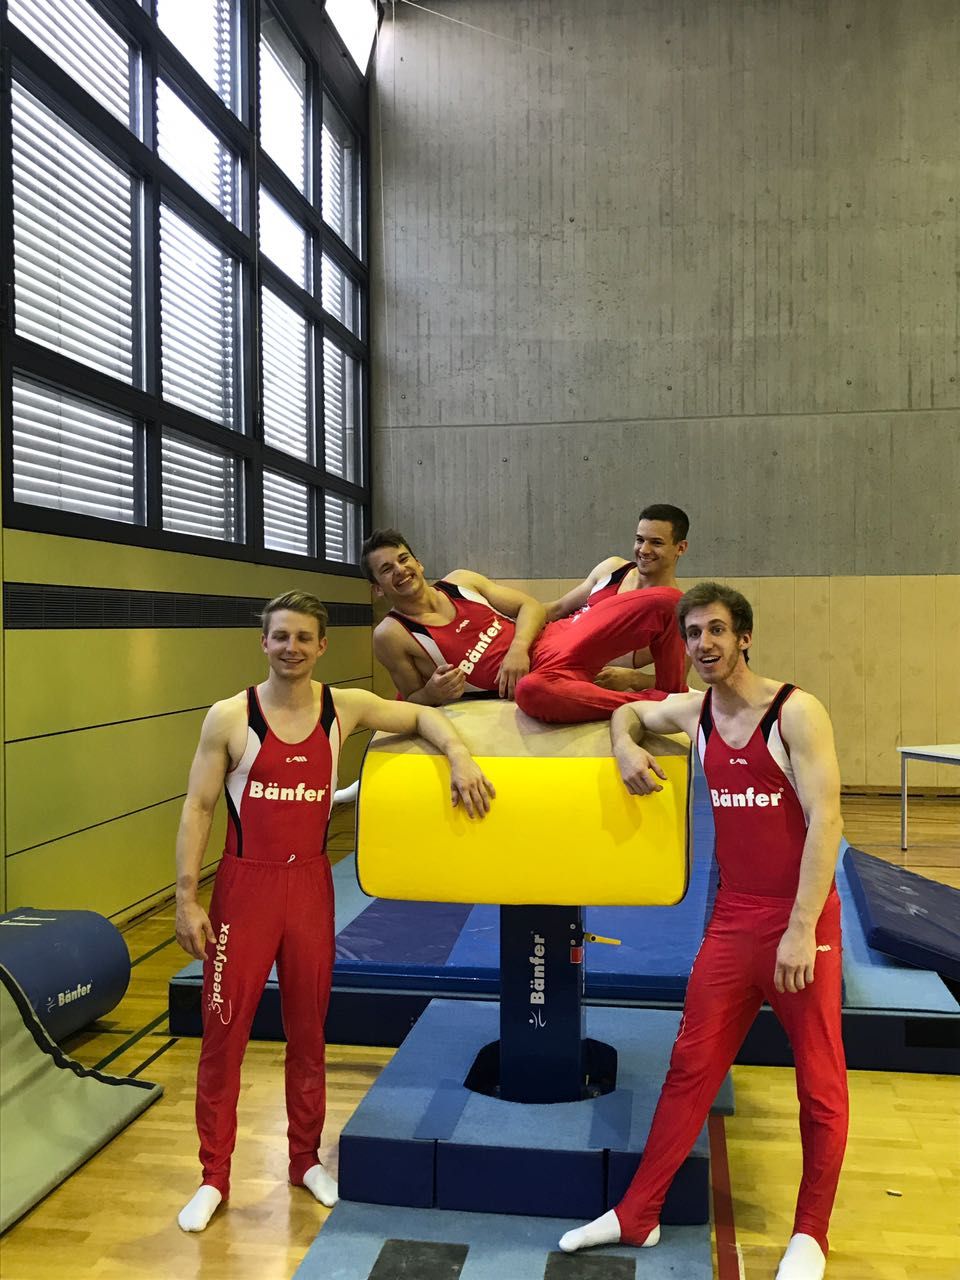 German university champion in gymnastics